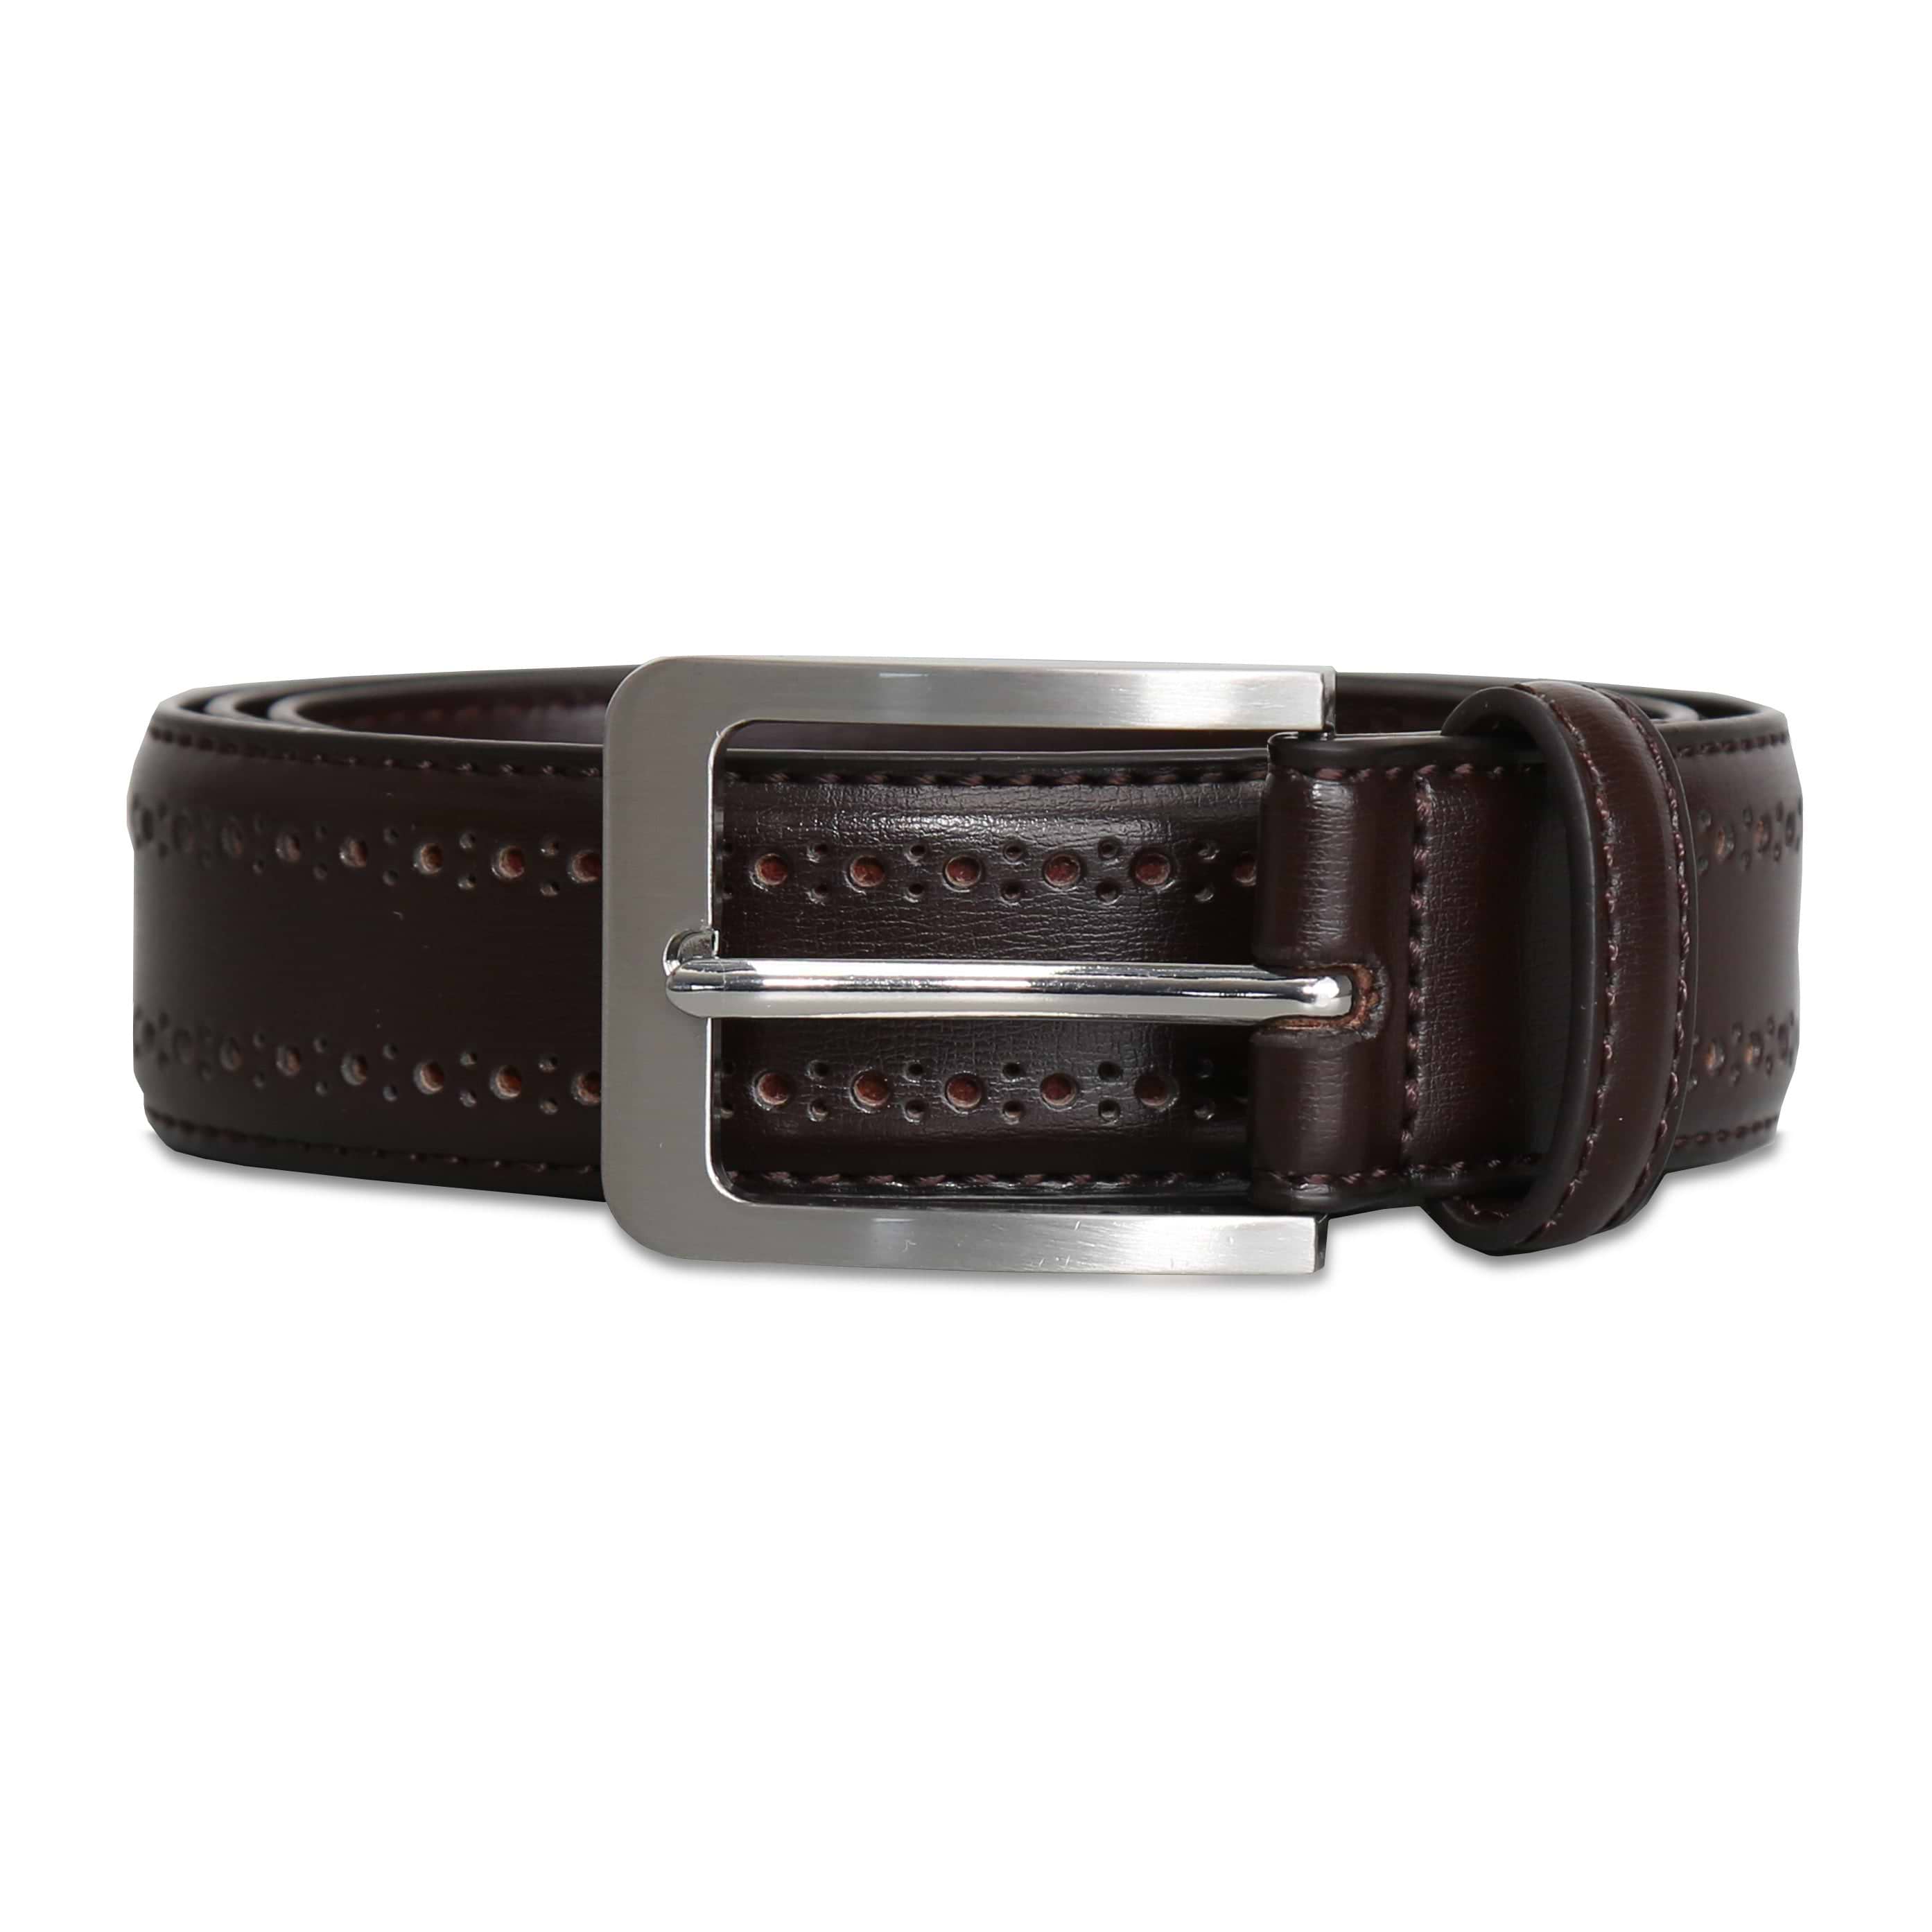 Perforated Leather Belt - Dark Brown